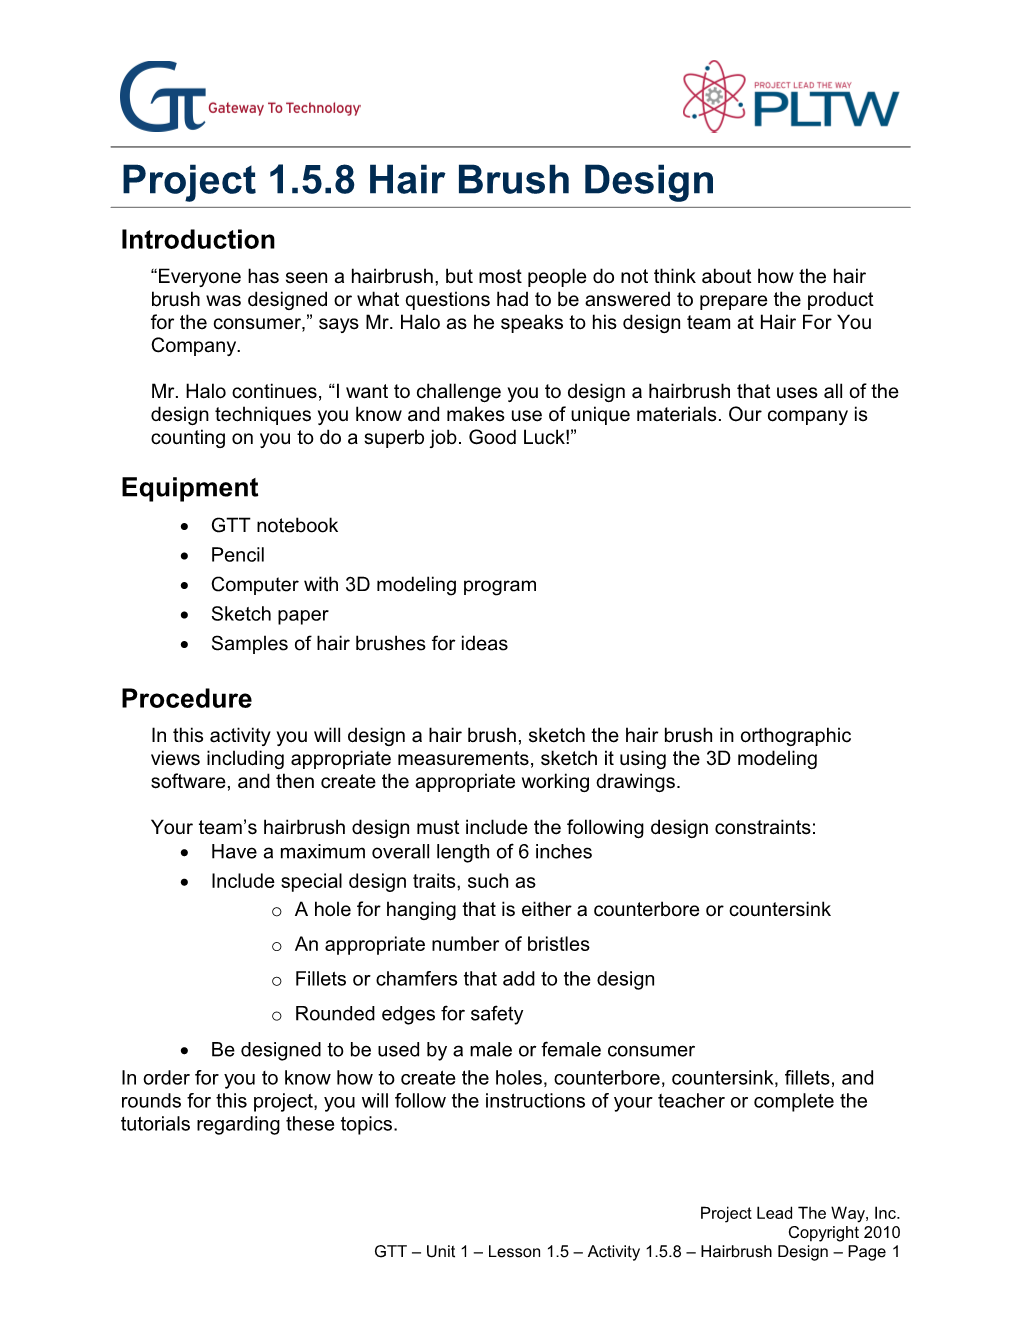 Activity 1.5.8 Hairbrush Design